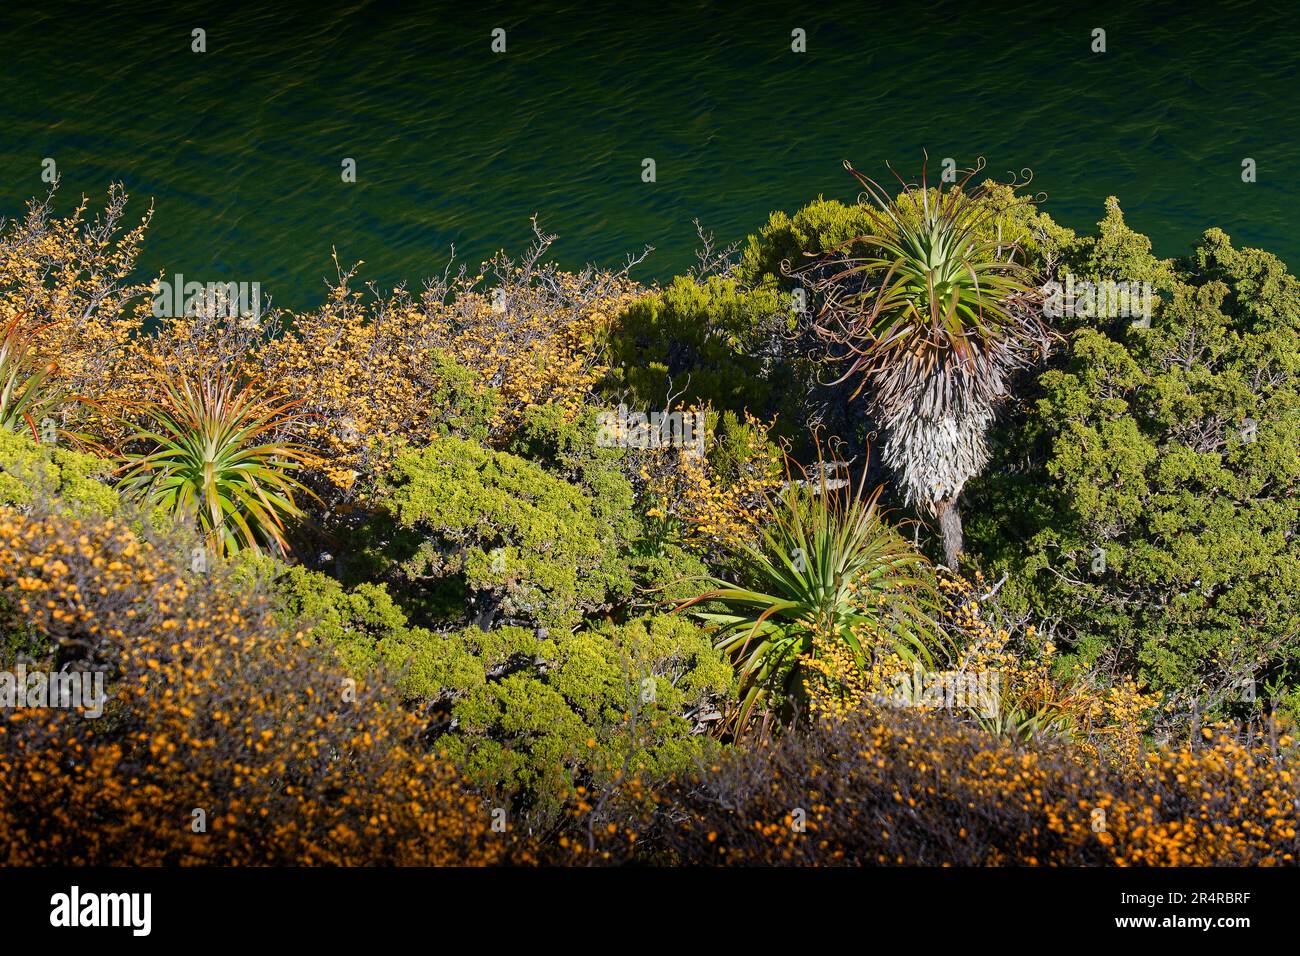 View of Pandanus and vegetation beside a lake at Tarn Shelf, Mount Field National Park, Hobart, Tasmania, Australia Stock Photo